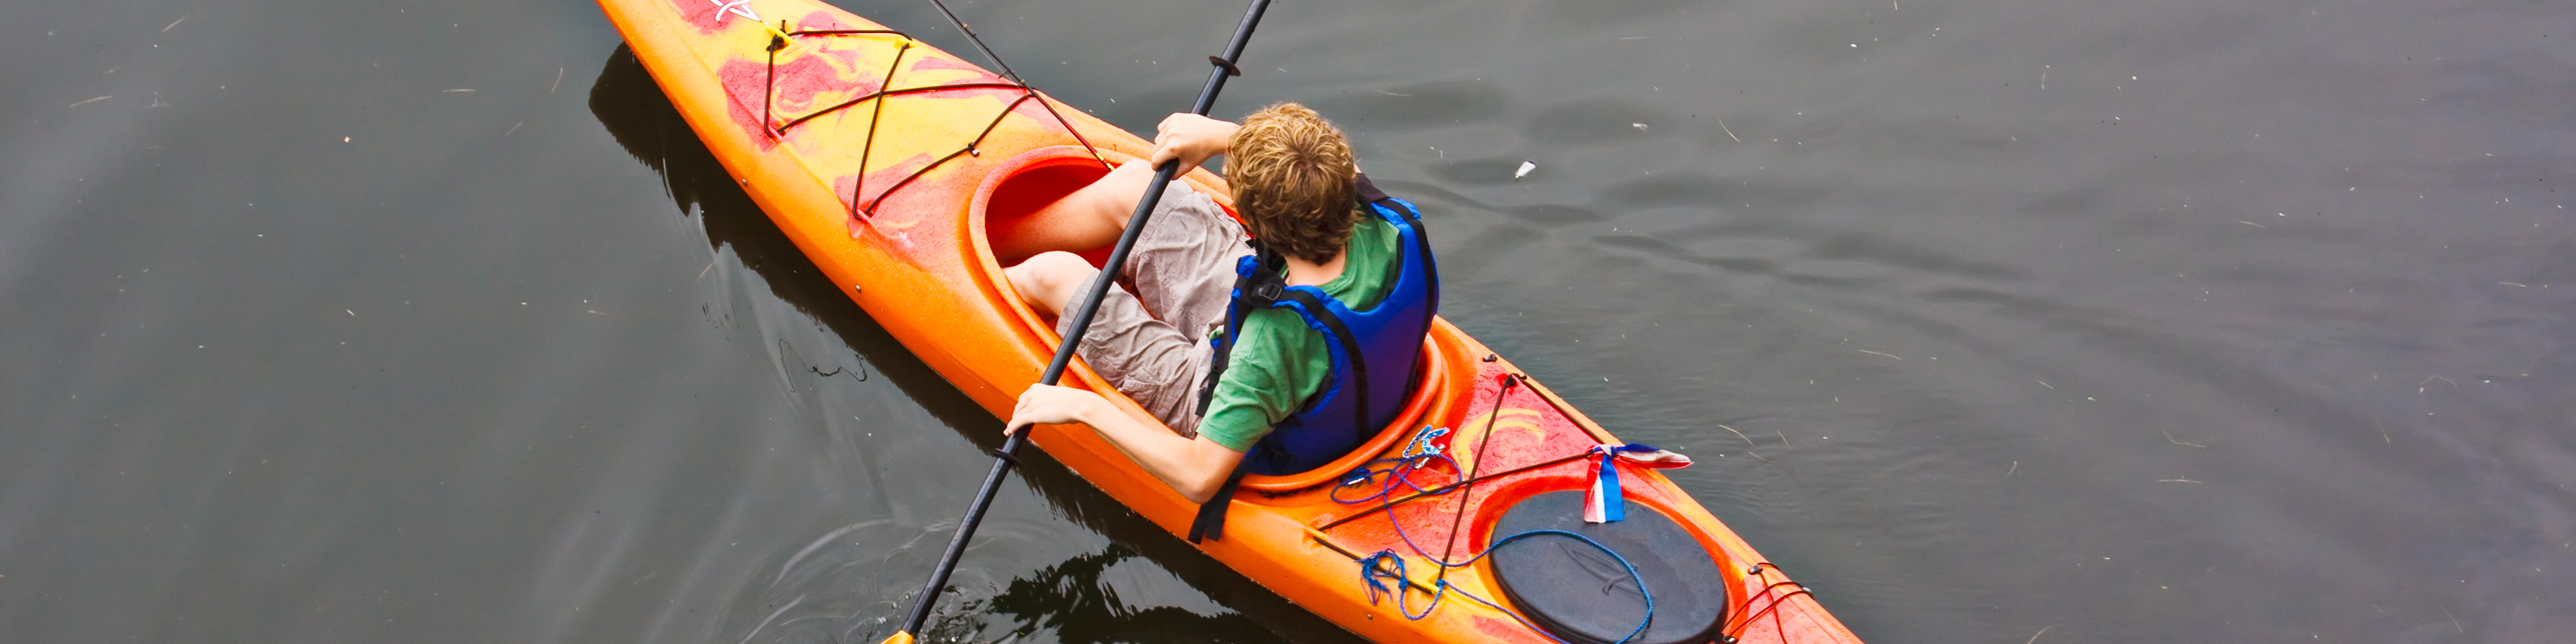 Teen in Kayak.